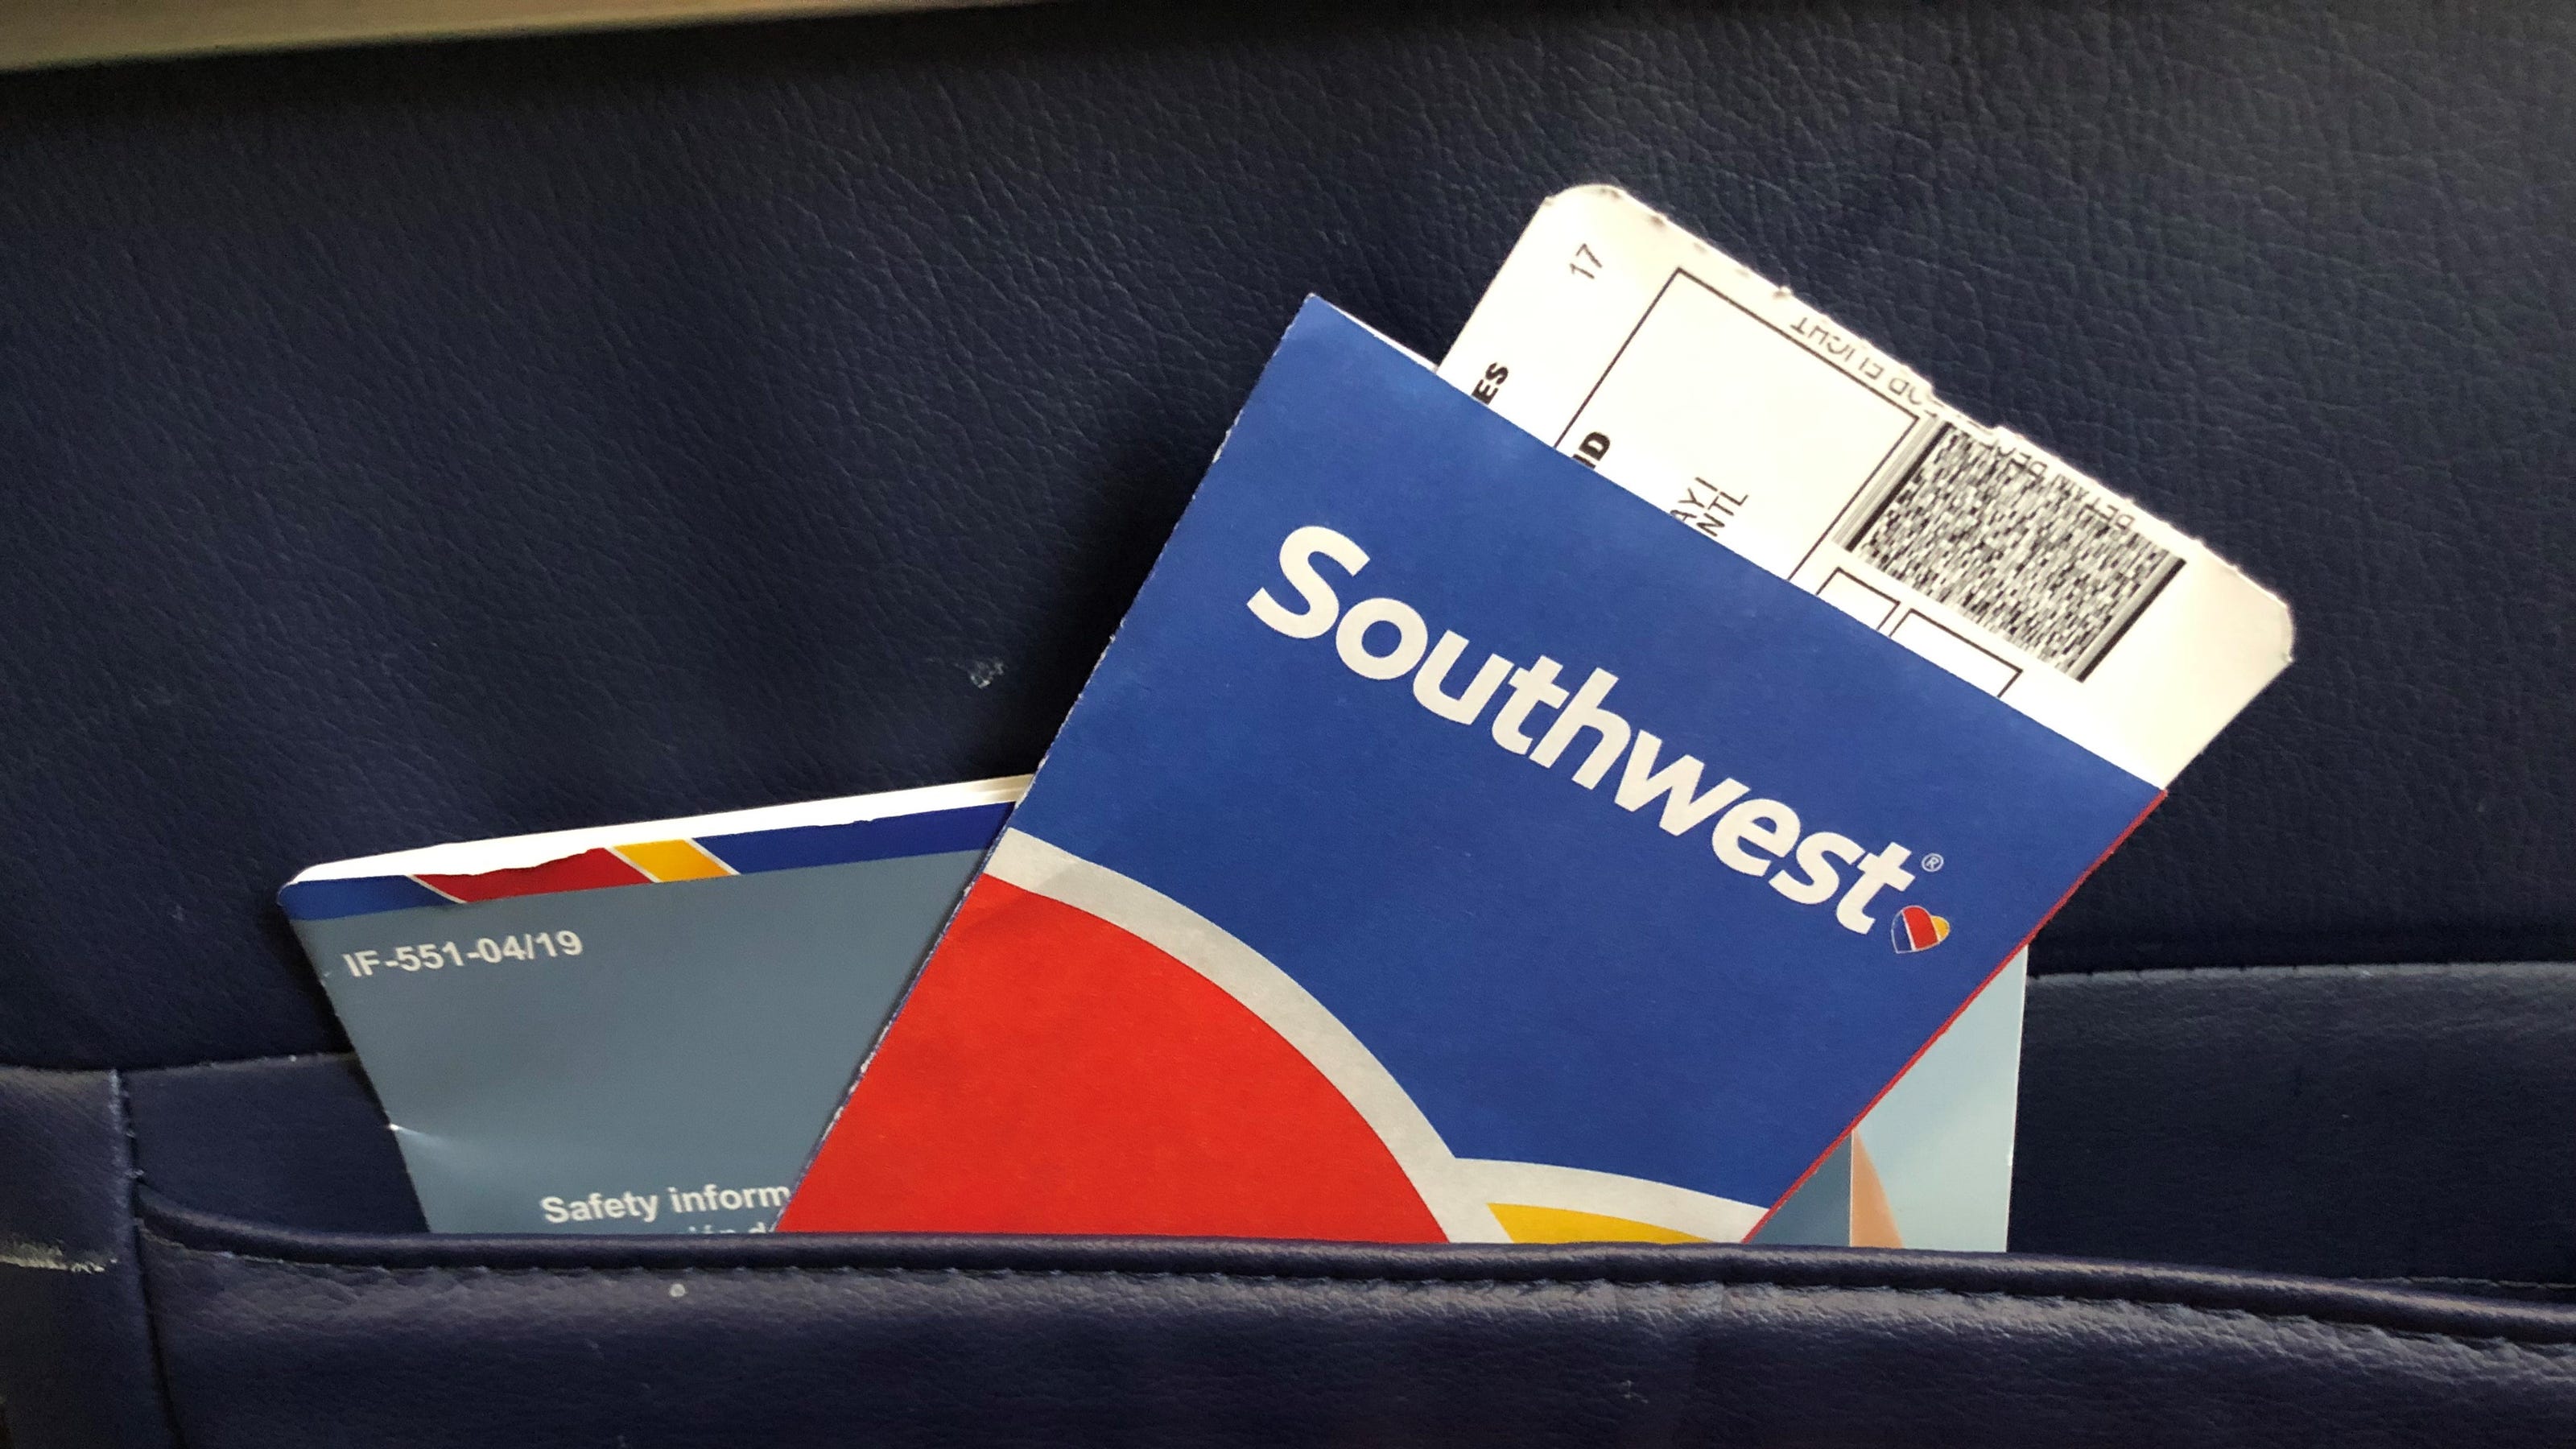 Southwest Airlines eliminating paper ticket jackets on June 1